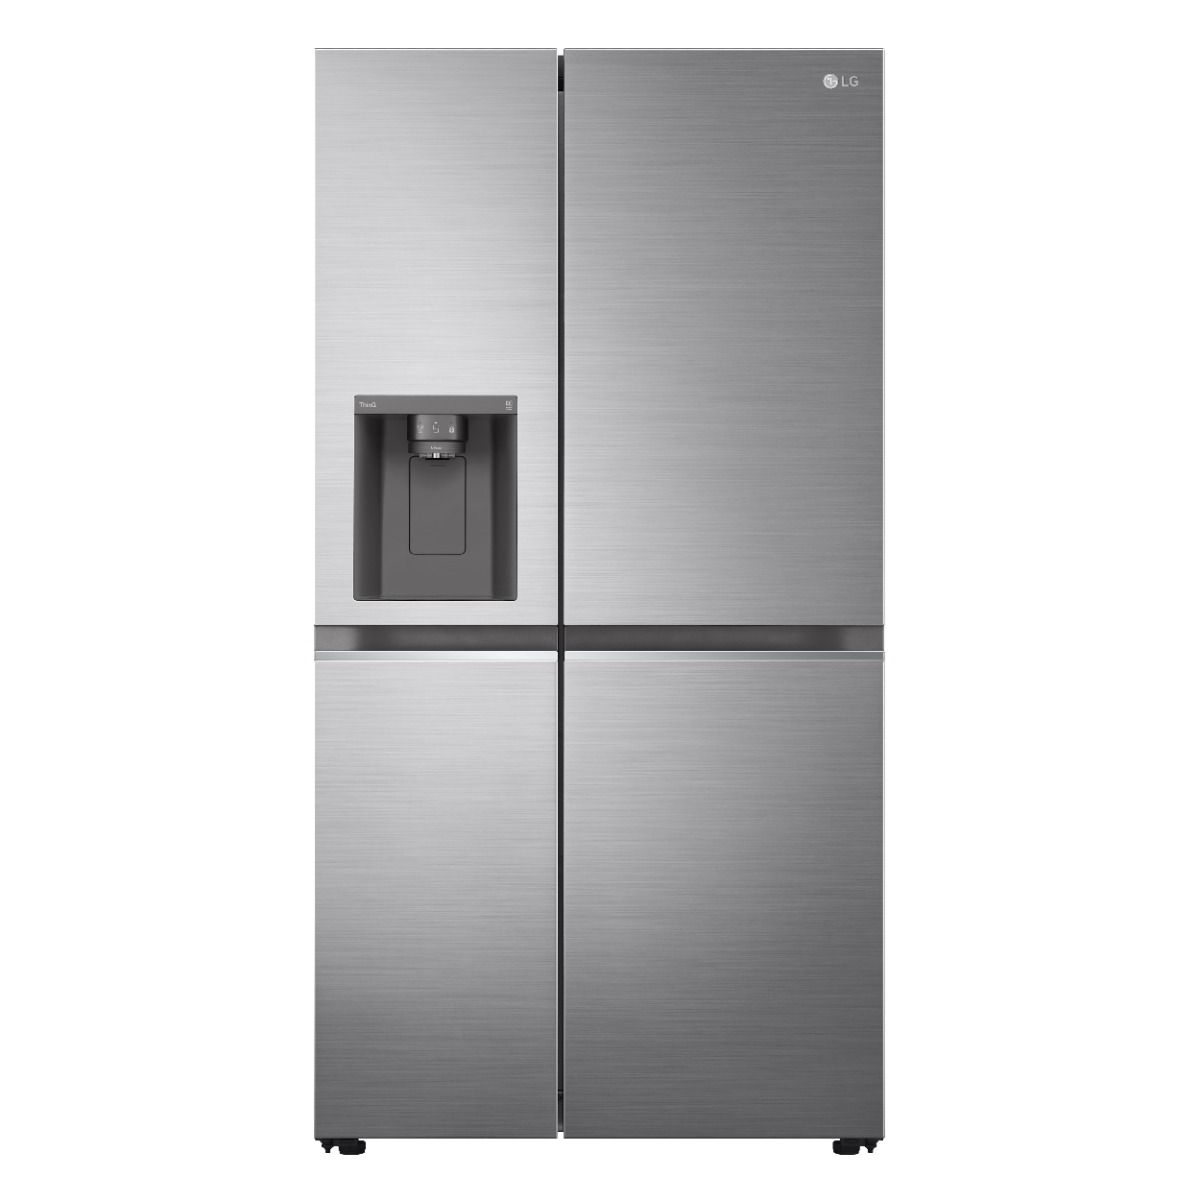 LG Side by Side refrigerator, 26.7 feet, 756 L, Linear compressor, ice maker, silver - LS32NBDSLV